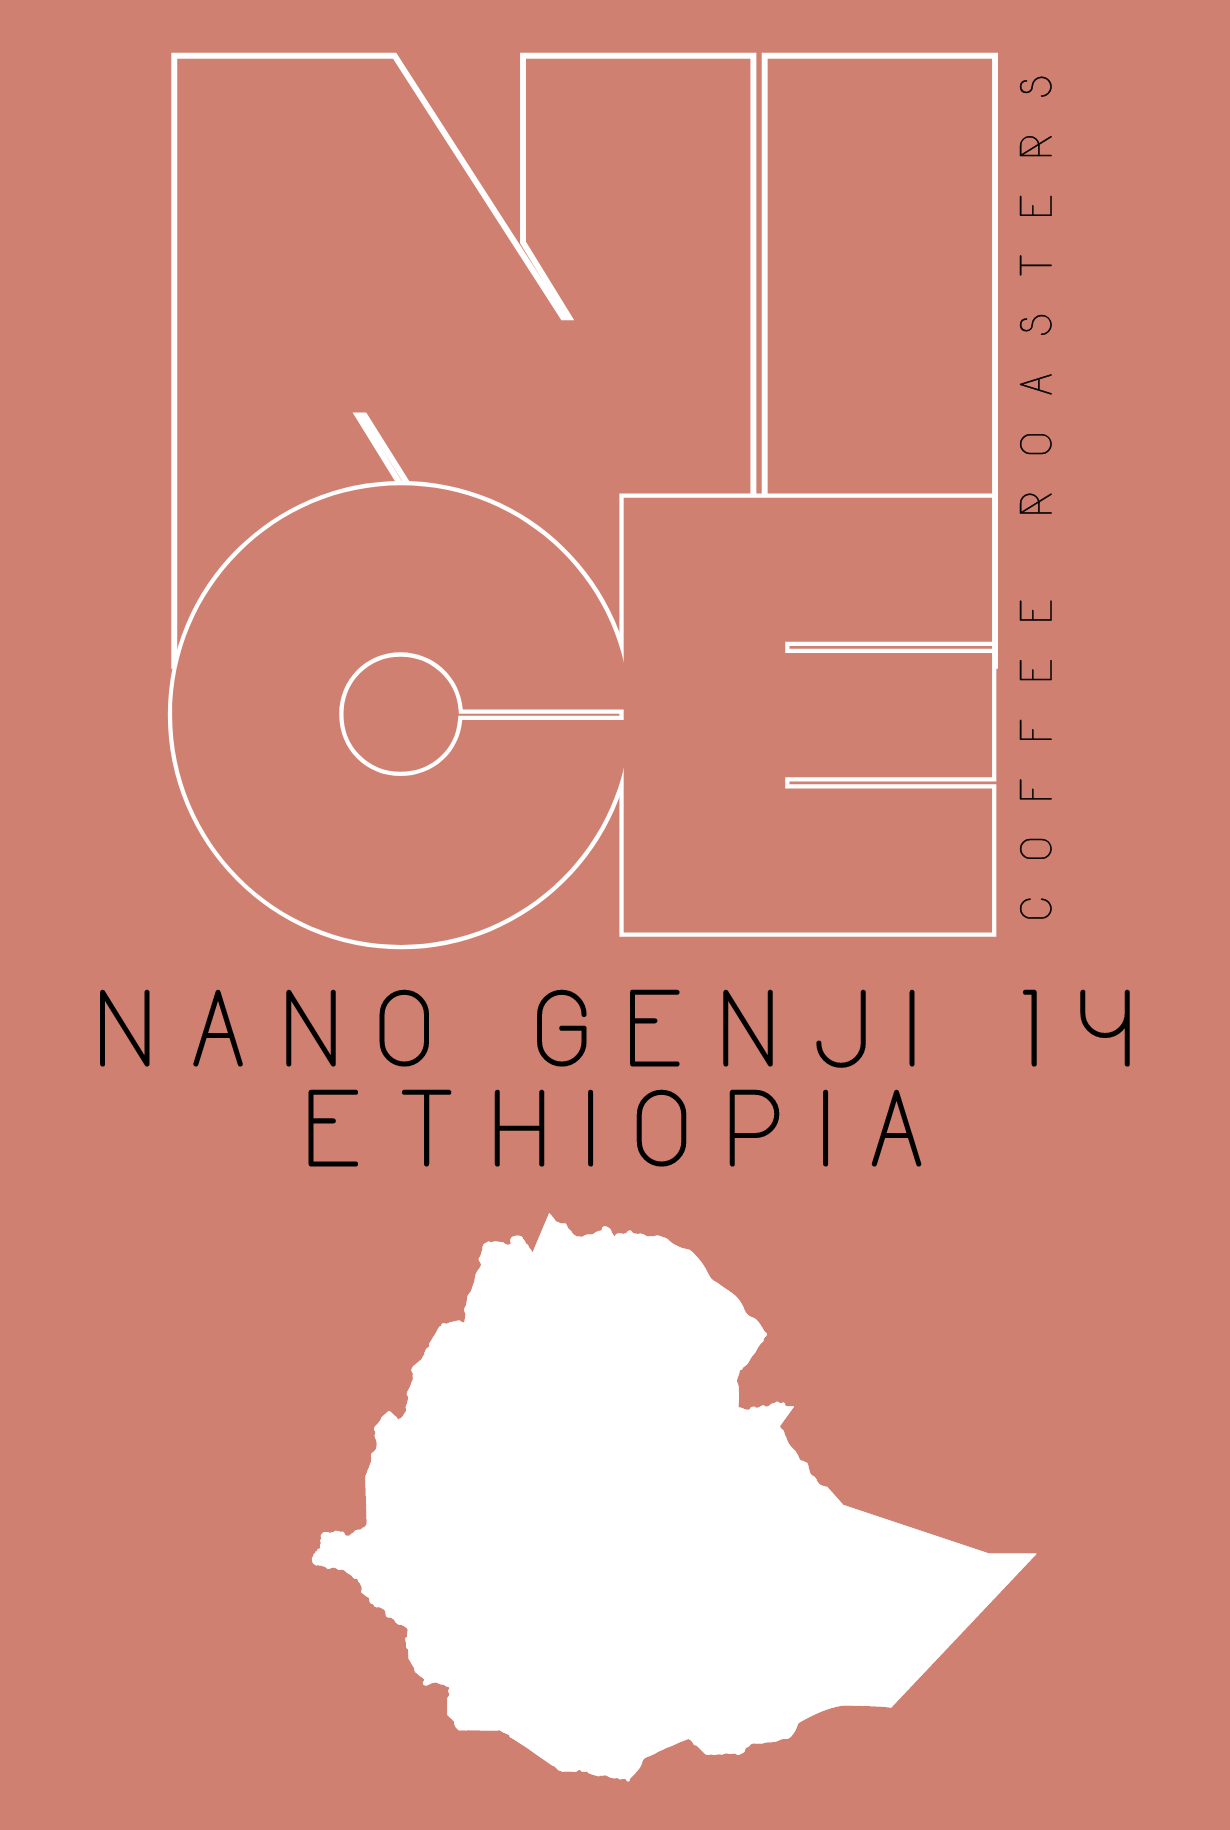 Nice Coffee Roasters Logo. Nano Genji 14 Ethiopia. Image of Ethiopia in white. Rose background.